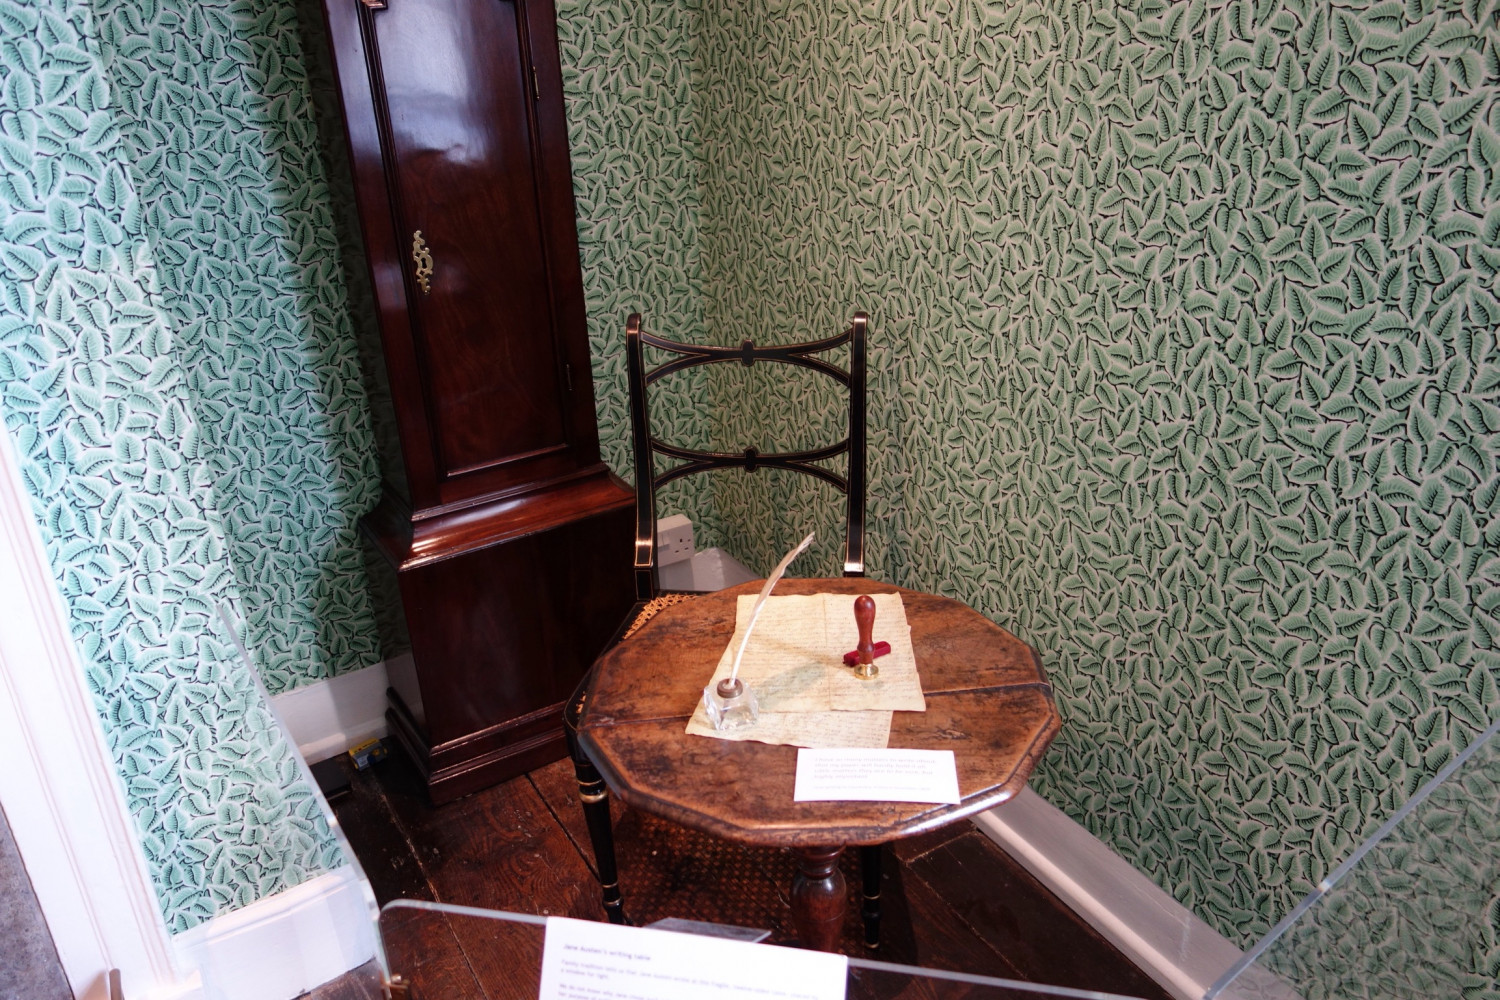 Jane Austen?s writing table, Chawton House